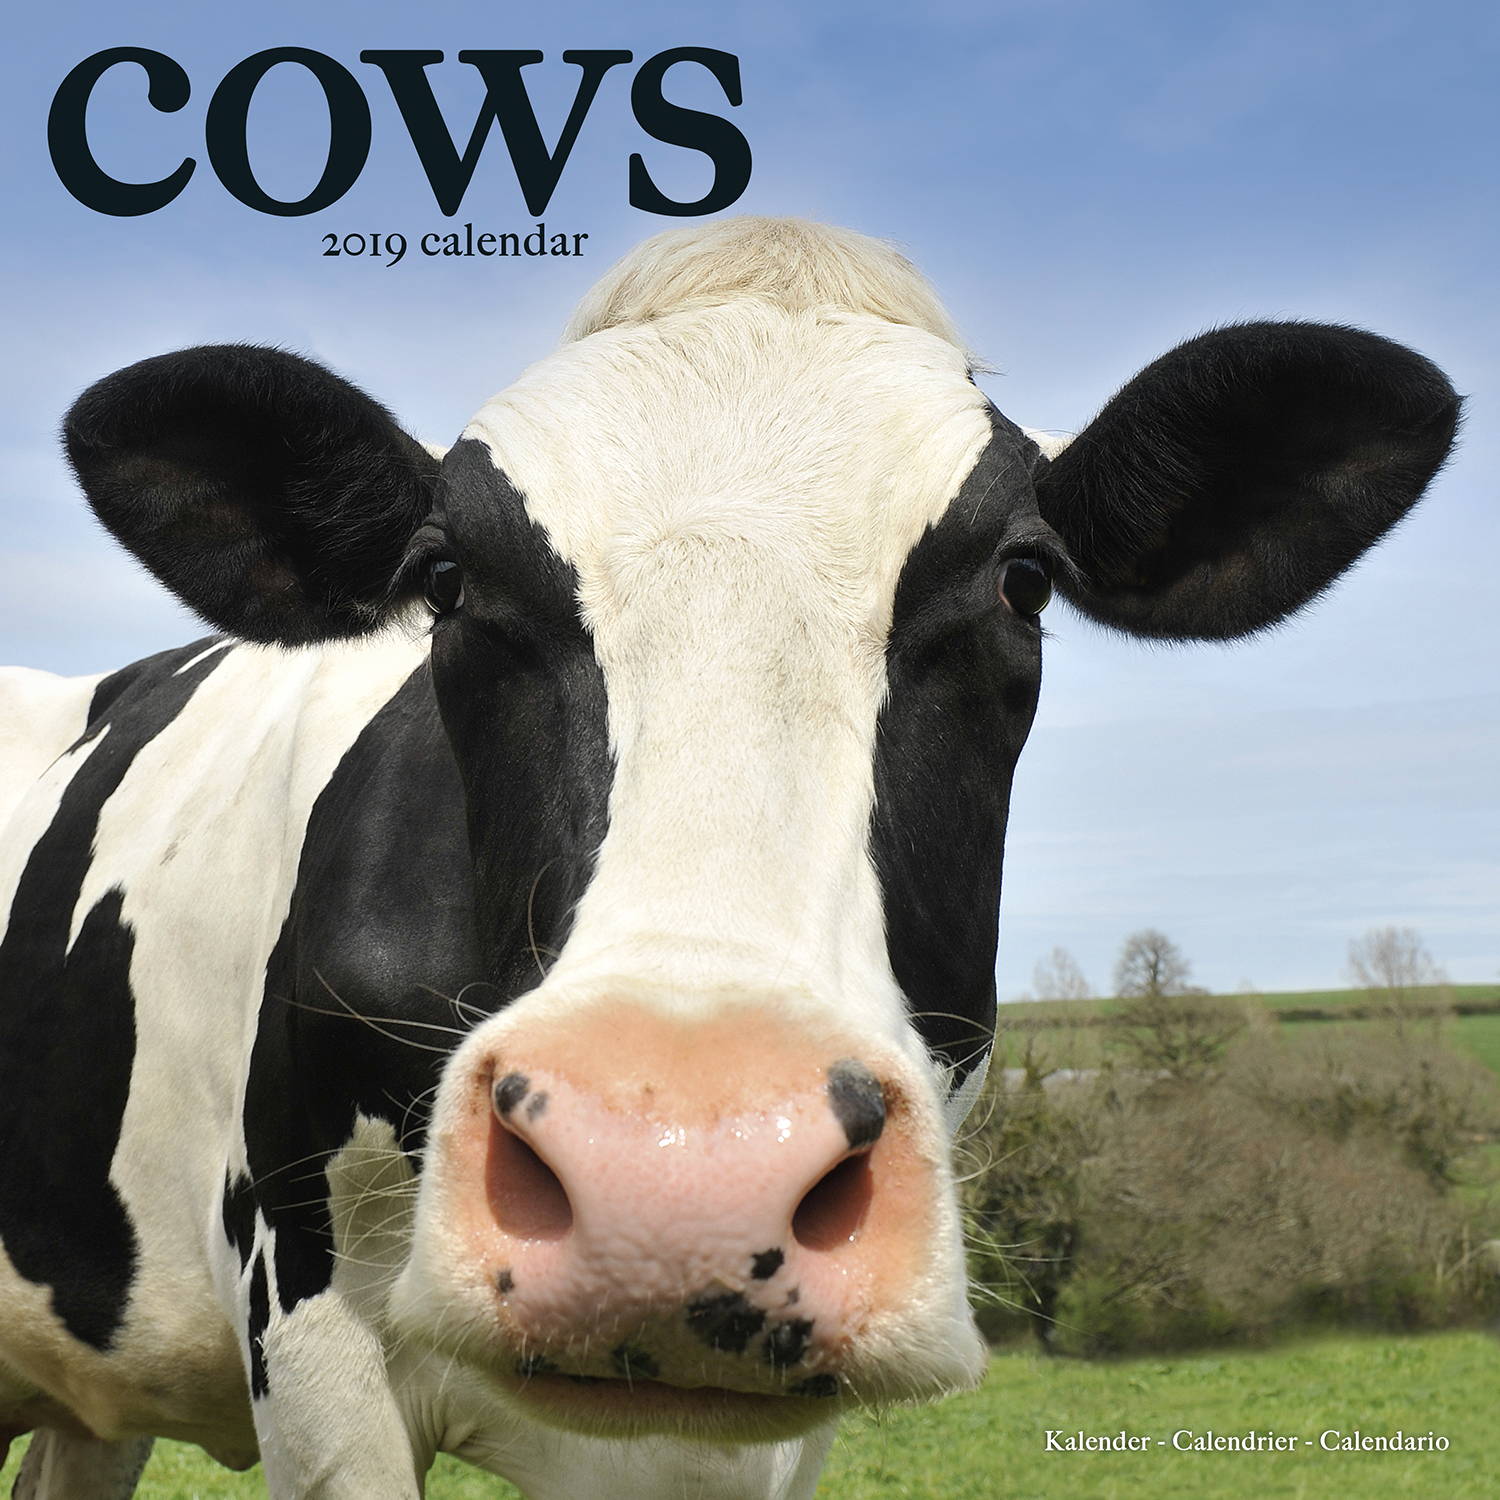 cows-calendar-animal-calendars-megacalendars